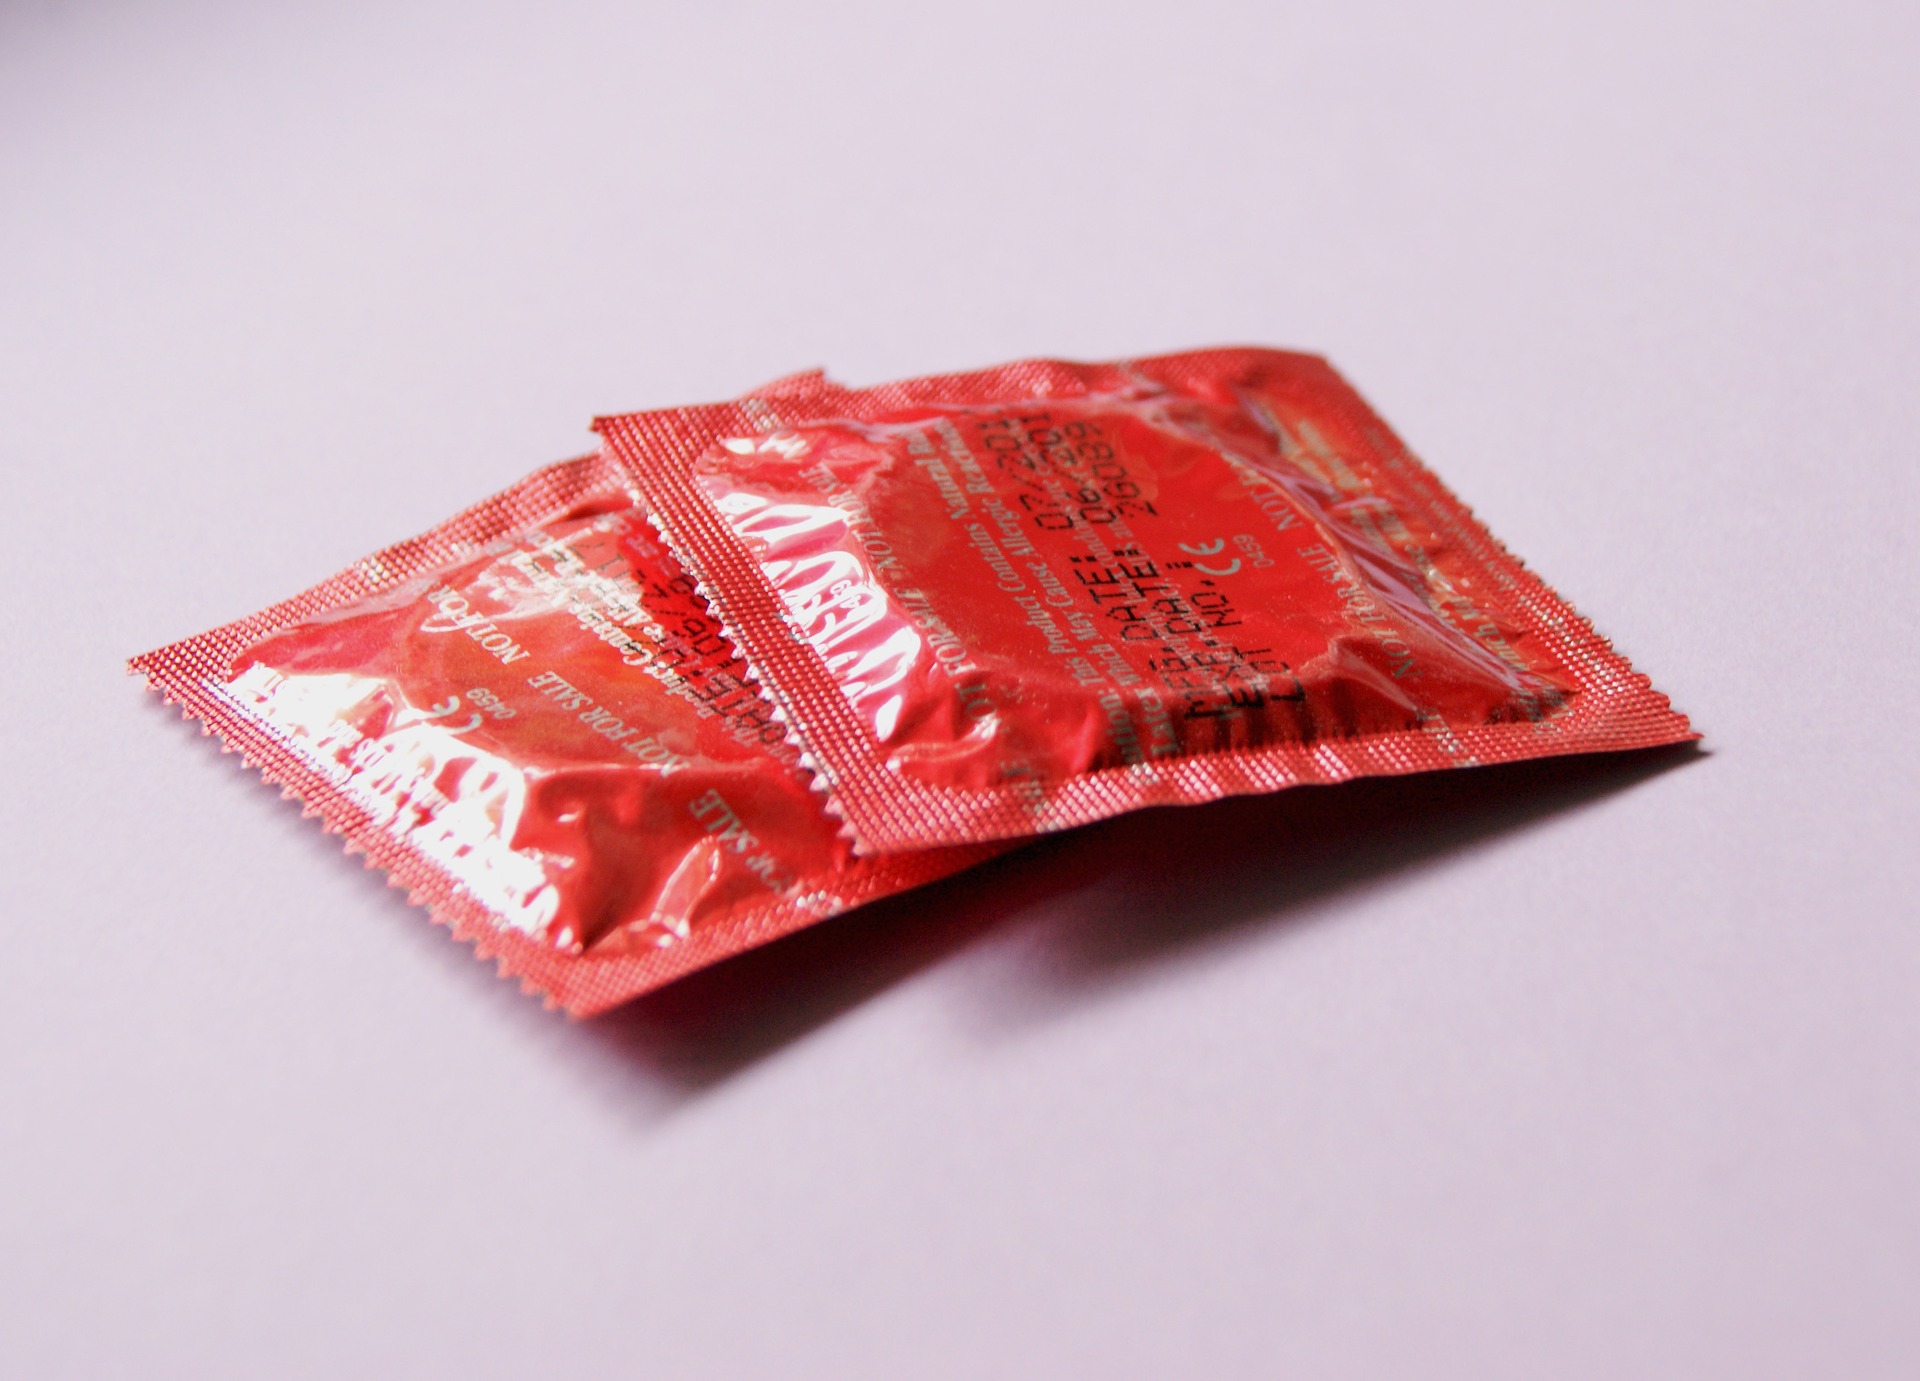 Производитель презервативов предупредил о росте цен